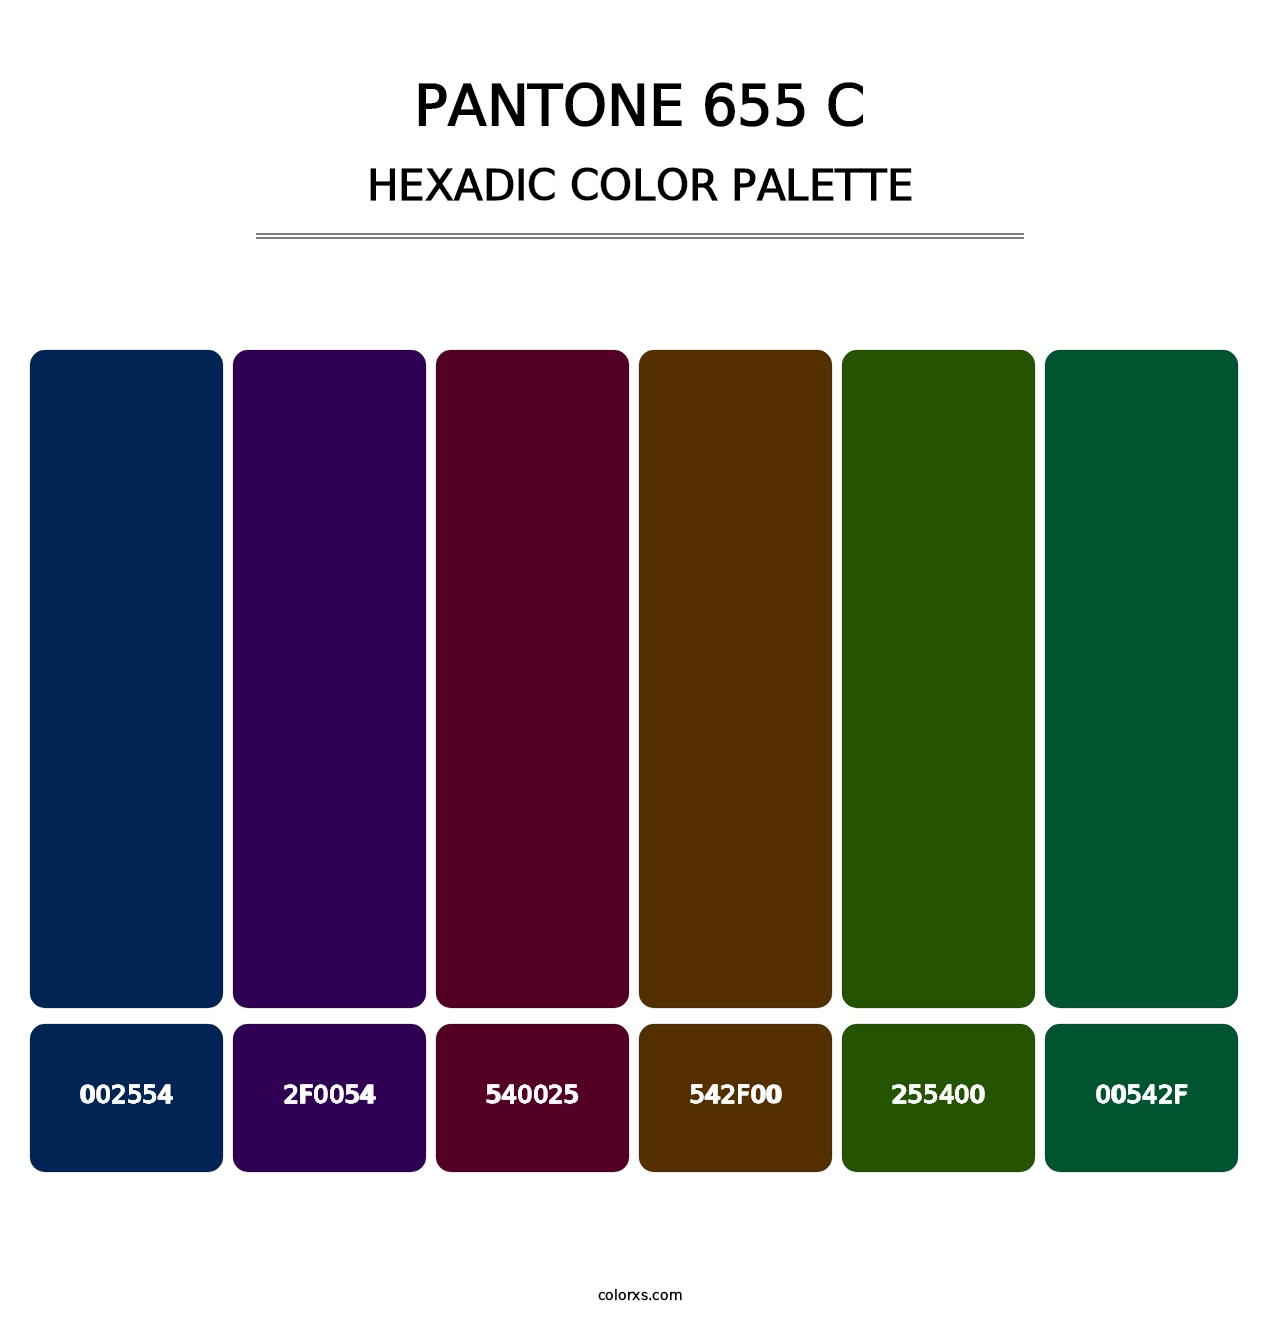 PANTONE 655 C - Hexadic Color Palette